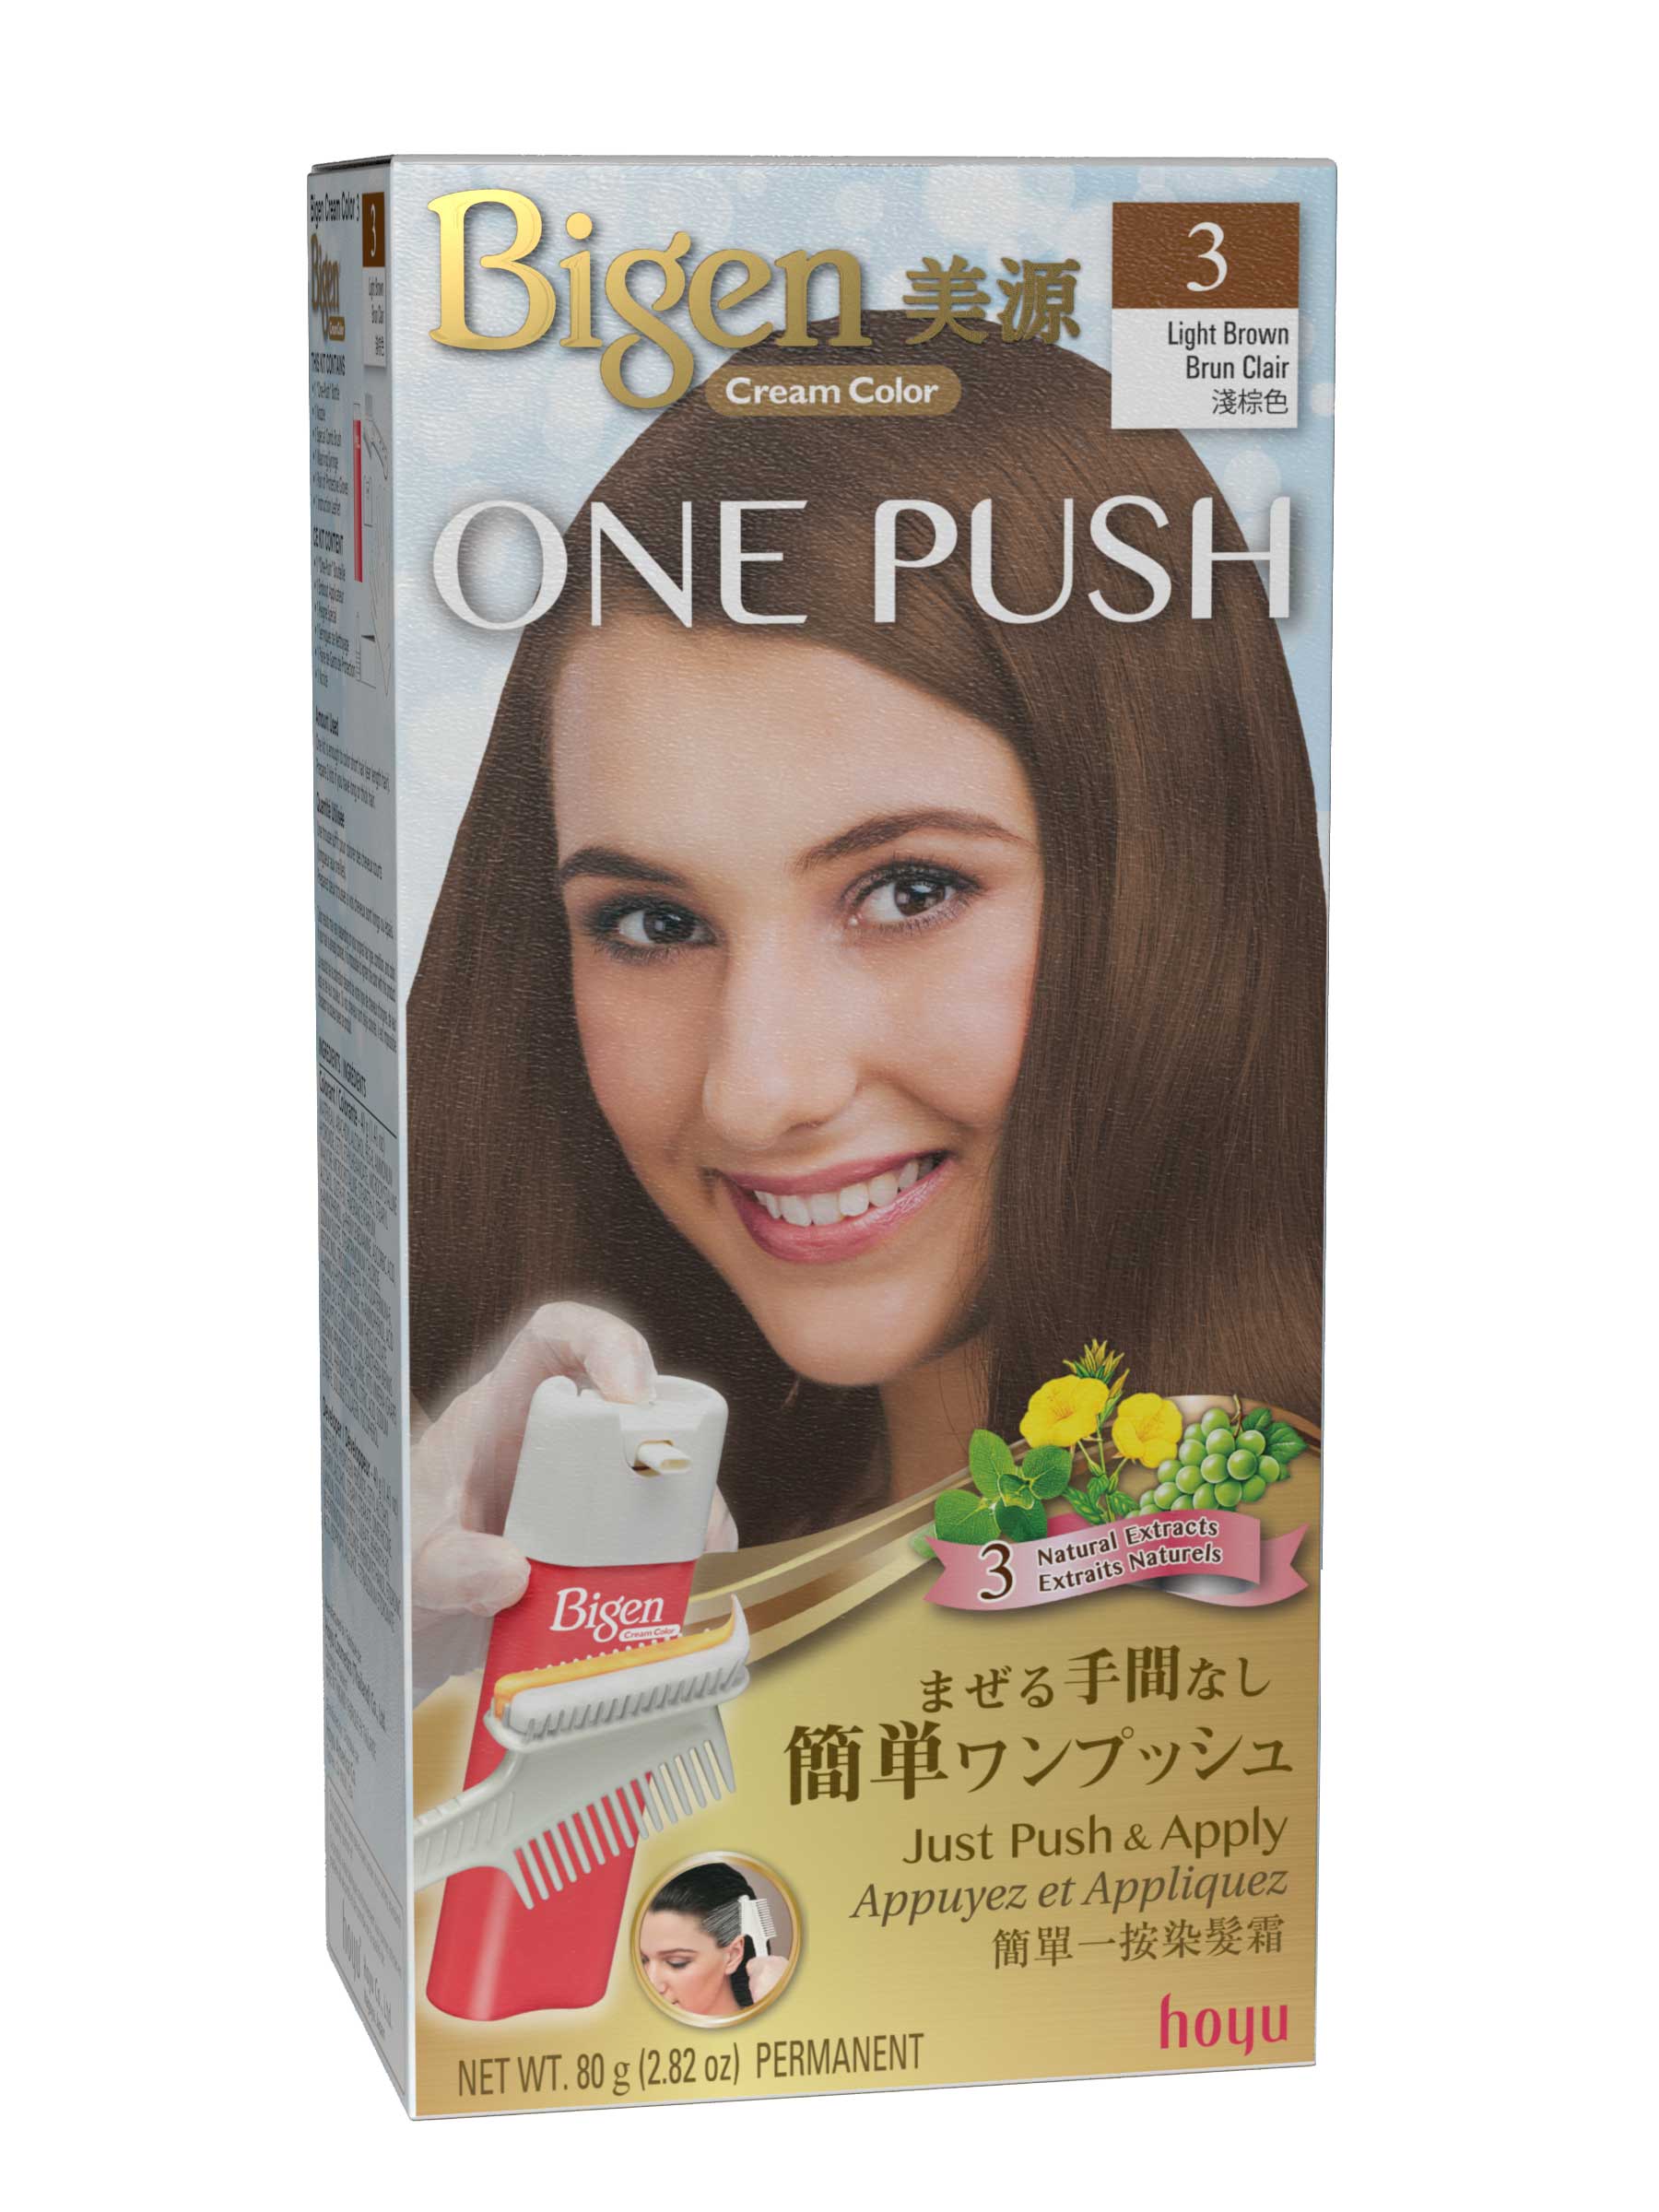 3-One Push